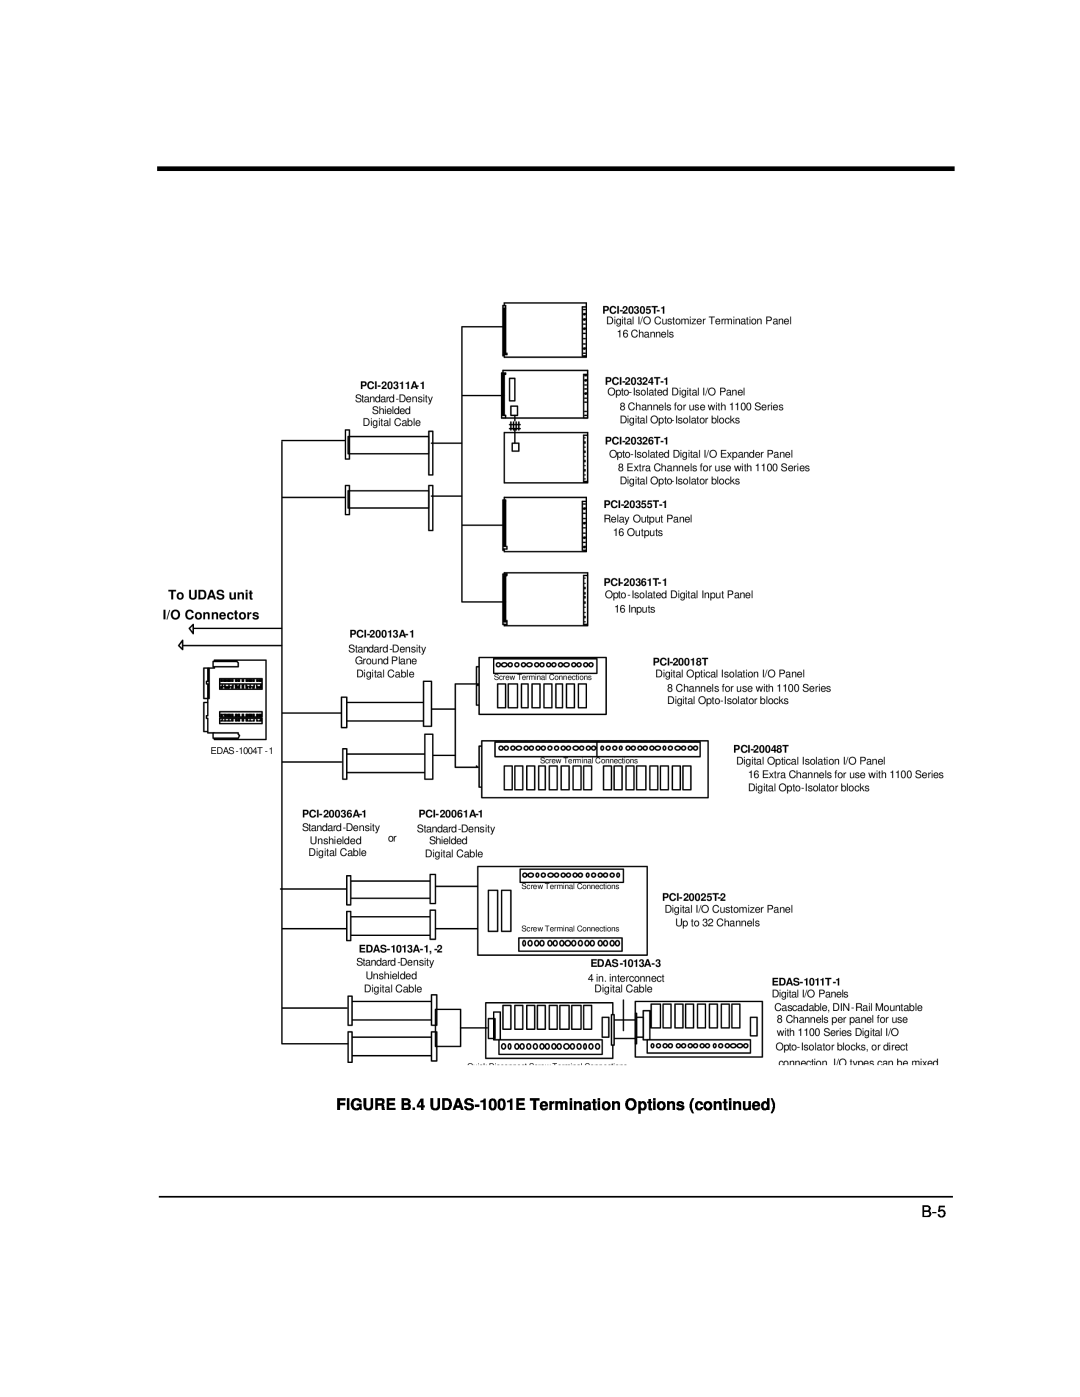 Intelligent Motion Systems user manual FIGURE B.4 UDAS-1001E Termination Options continued, To UDAS unit, I/O Connectors 